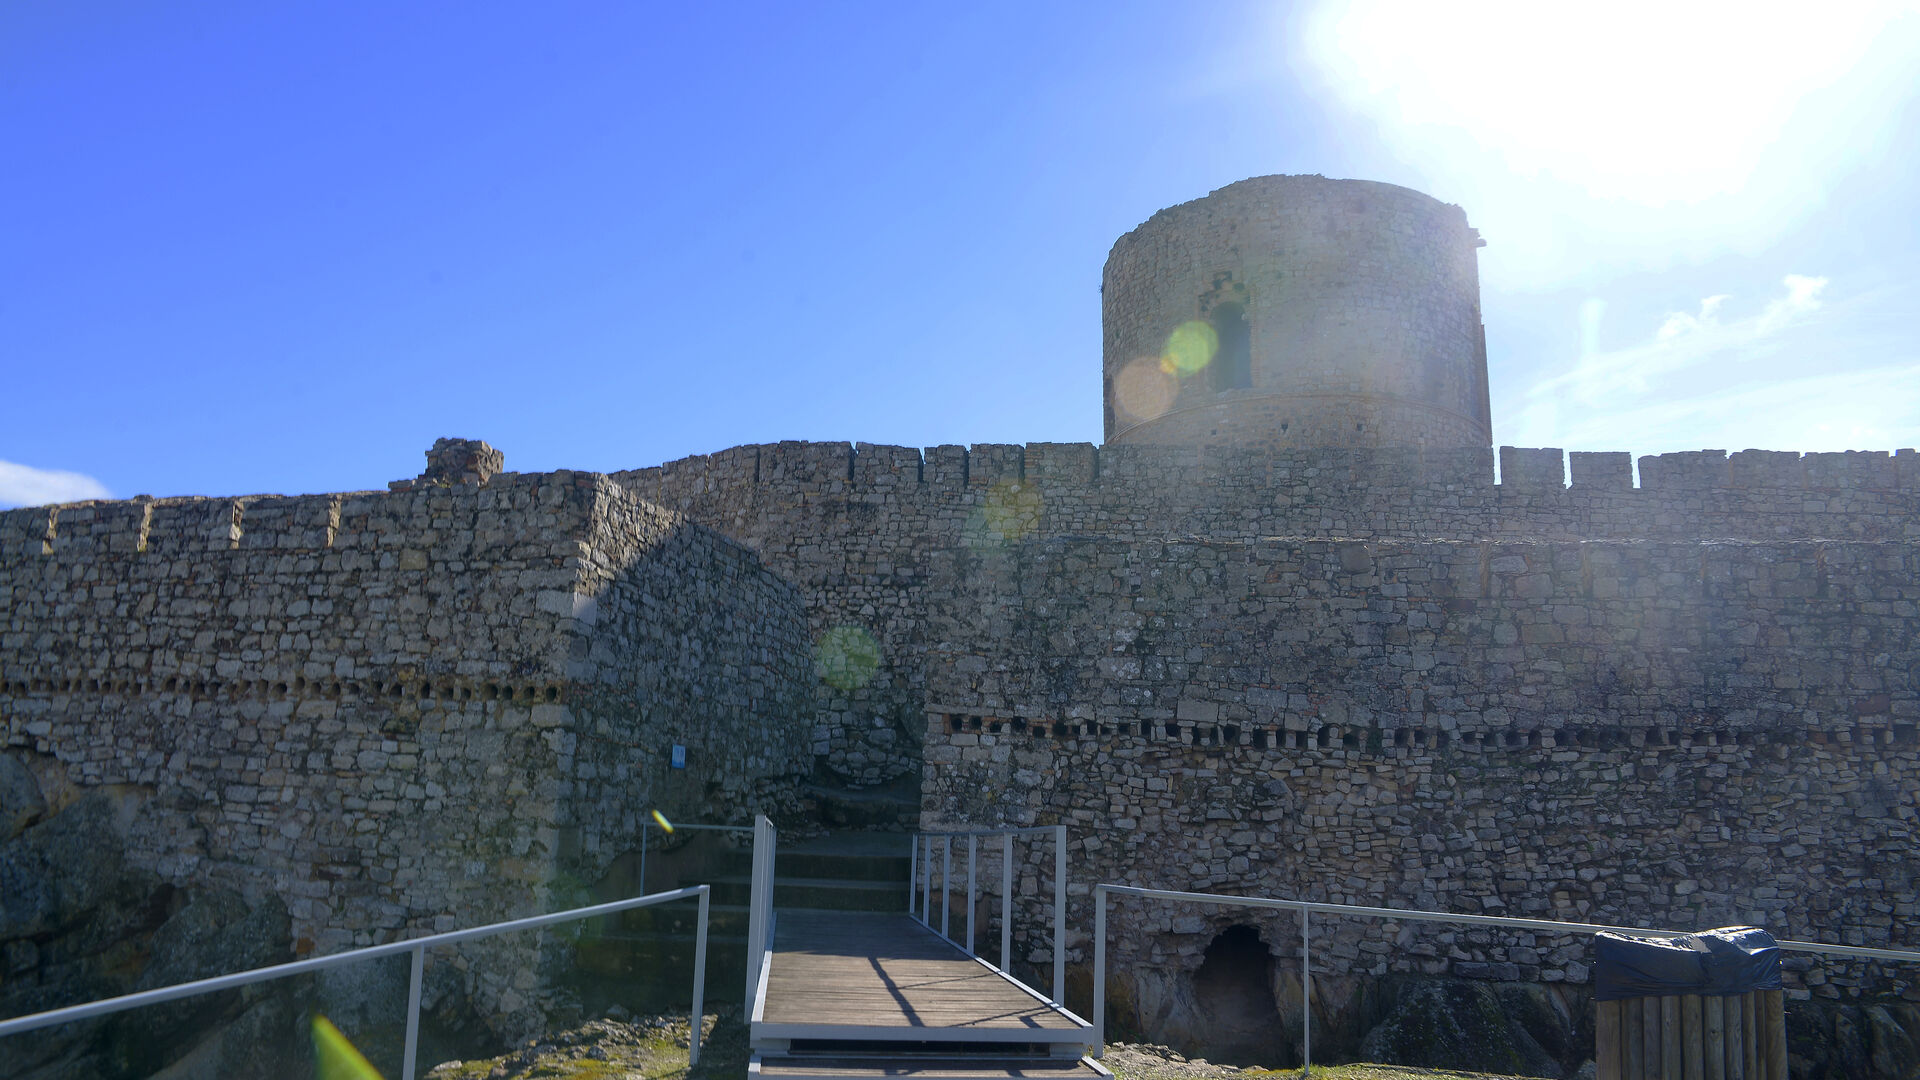 Fotos del castillo de Jimena de la frontera